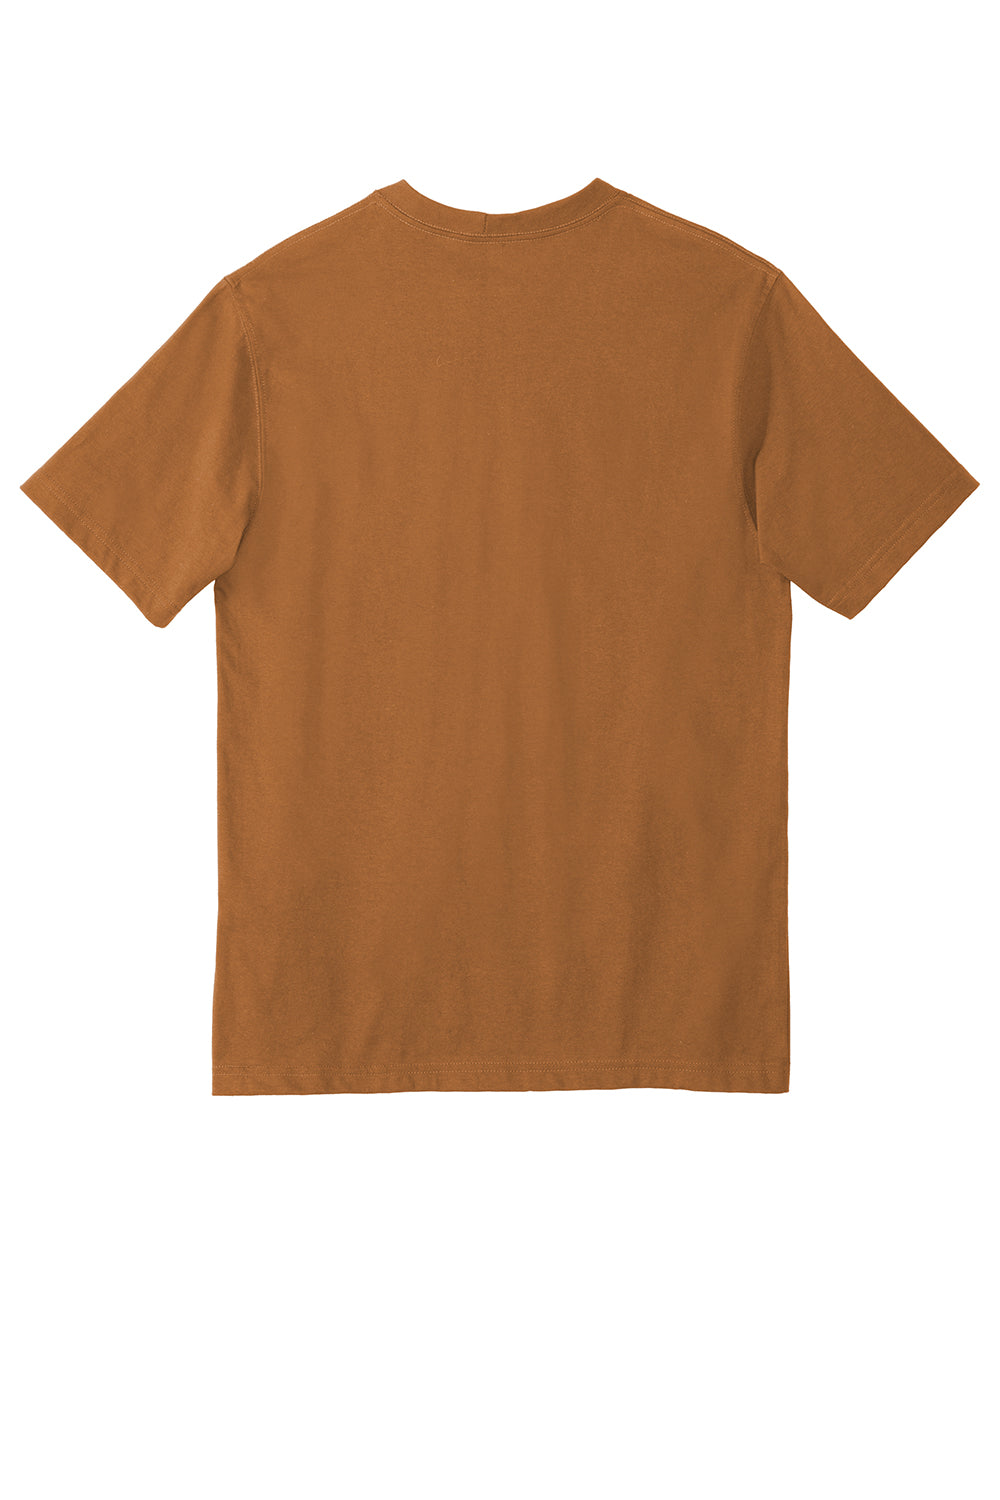 Carhartt CTK87/CTTK87 Mens Workwear Short Sleeve Crewneck T-Shirt w/ Pocket Carhartt Brown Flat Back